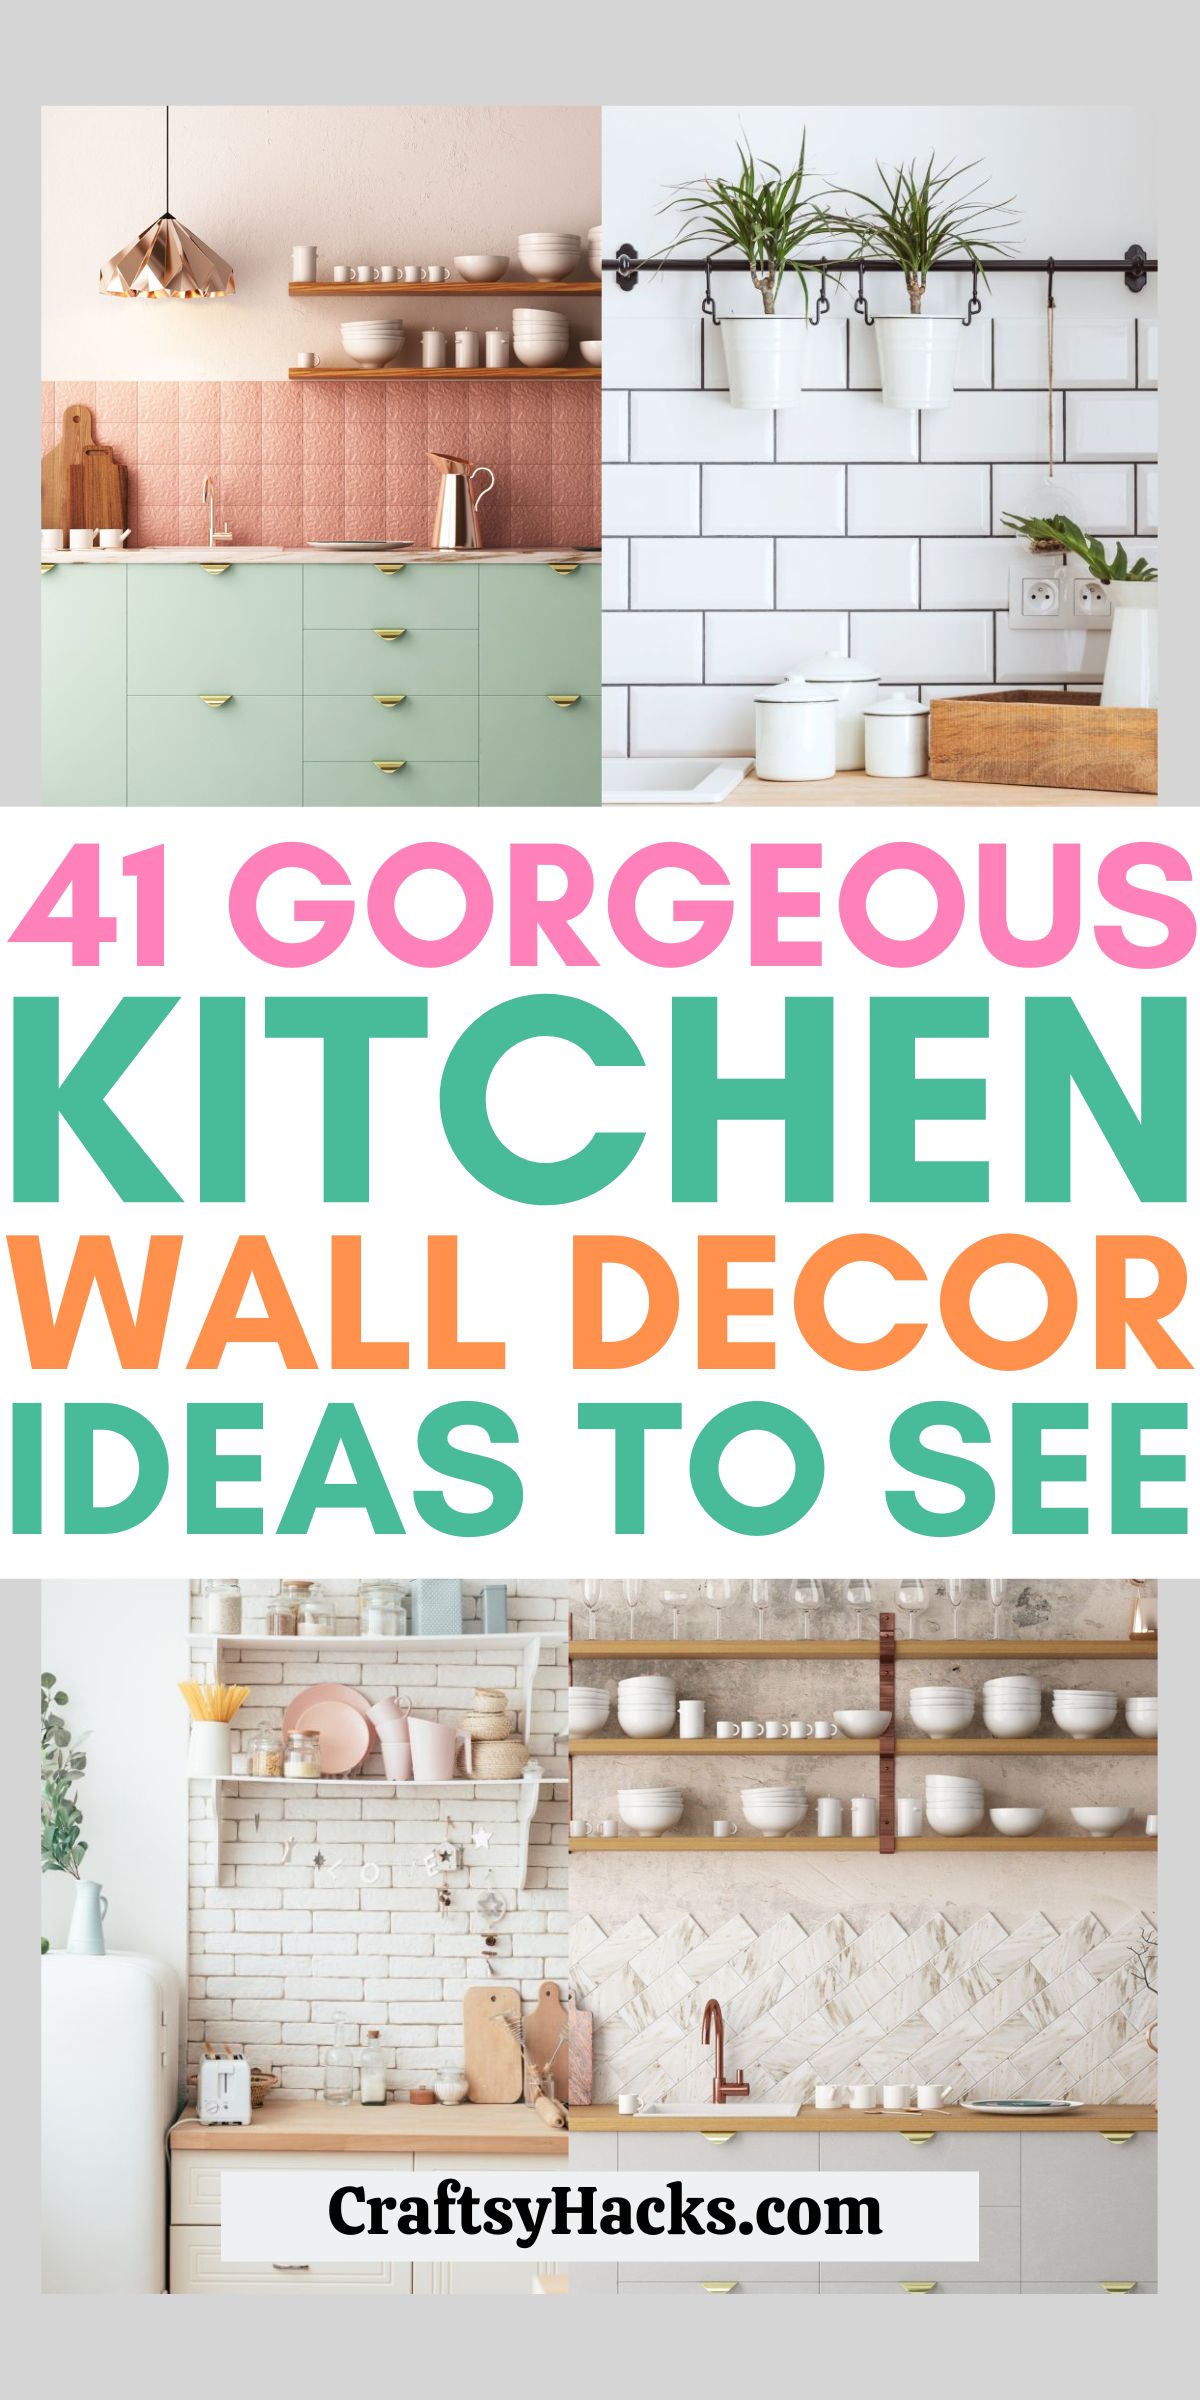 20 Gorgeous Kitchen Wall Decor Ideas   Craftsy Hacks